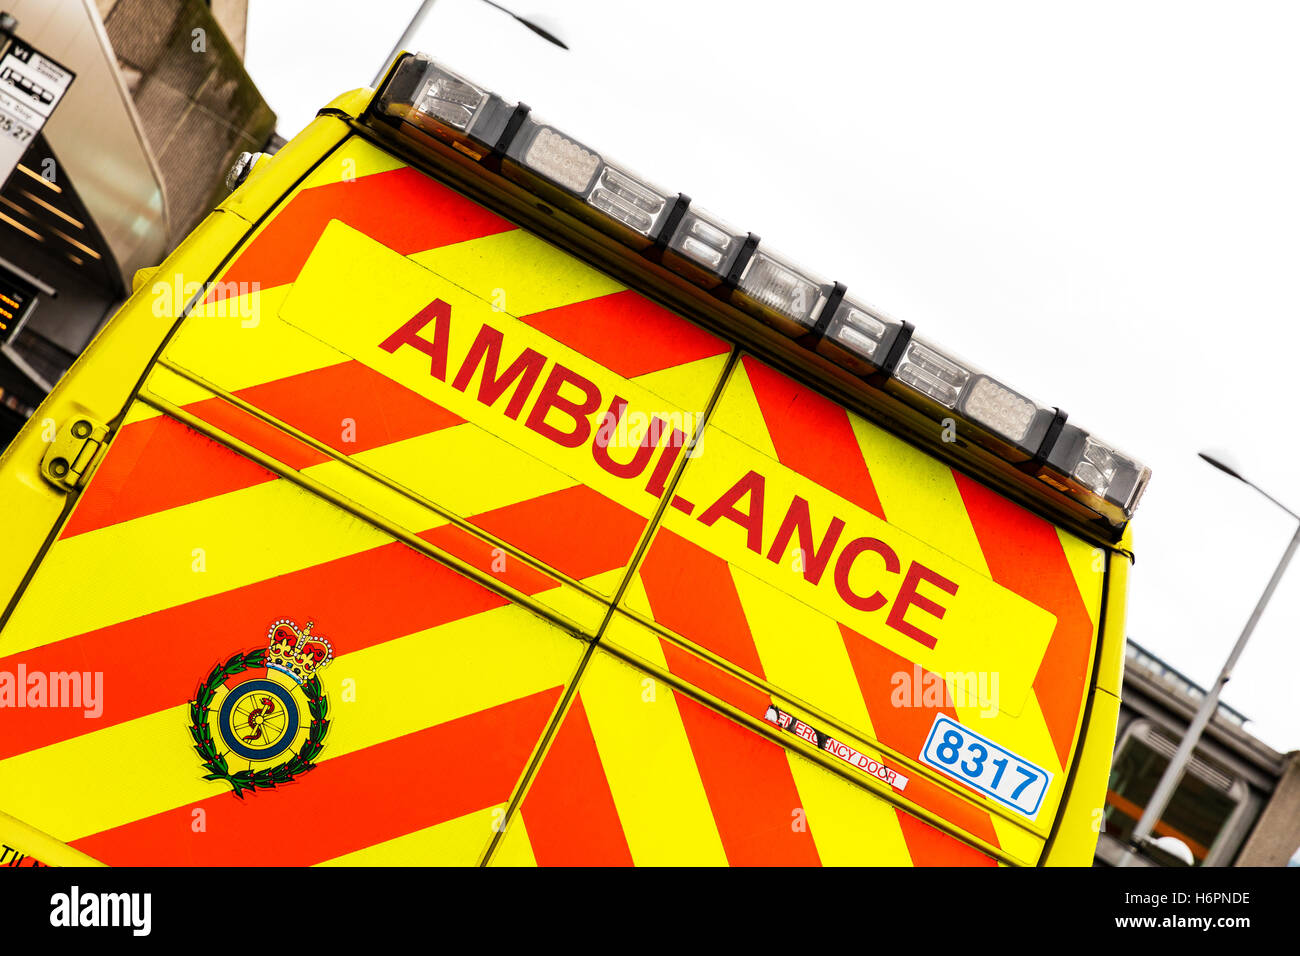 Ambulance van vehicle rear back doors vehicles sign name word vans vehicles GB UK England Stock Photo